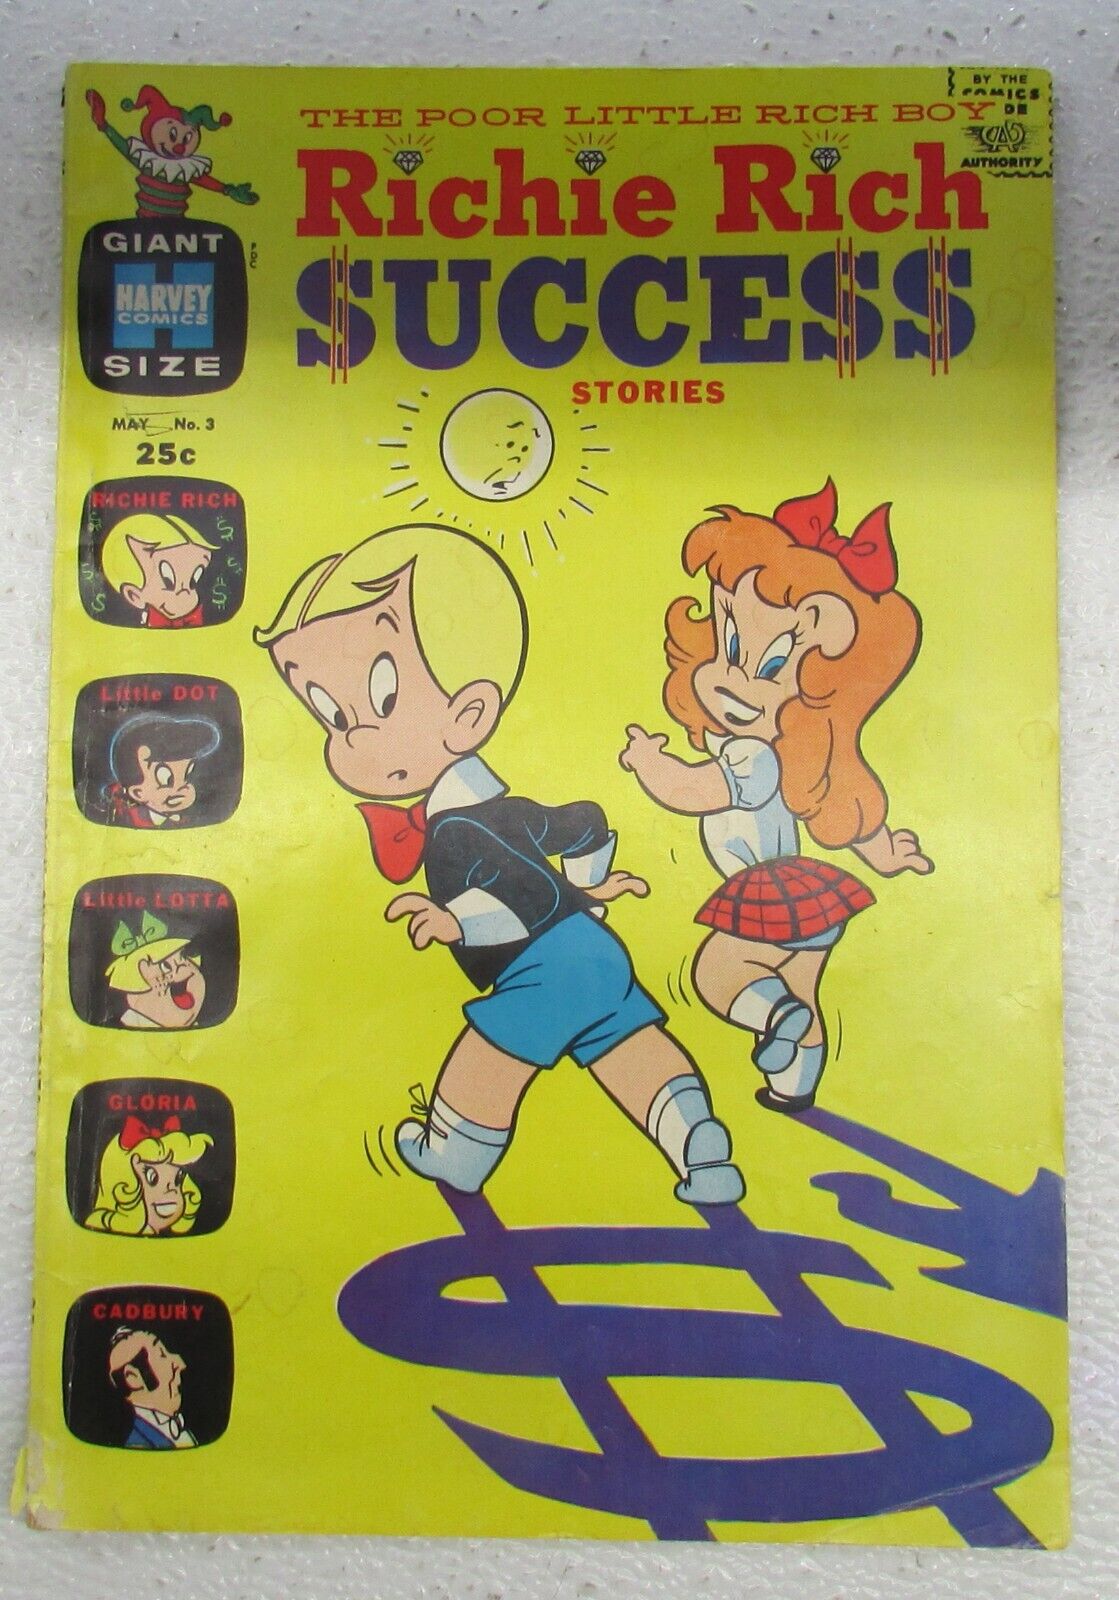 COMIC BOOK GIANT HARVEY COMICS RICHIE RICH SUCCESS STORIES #3 MAY 1965 25¢